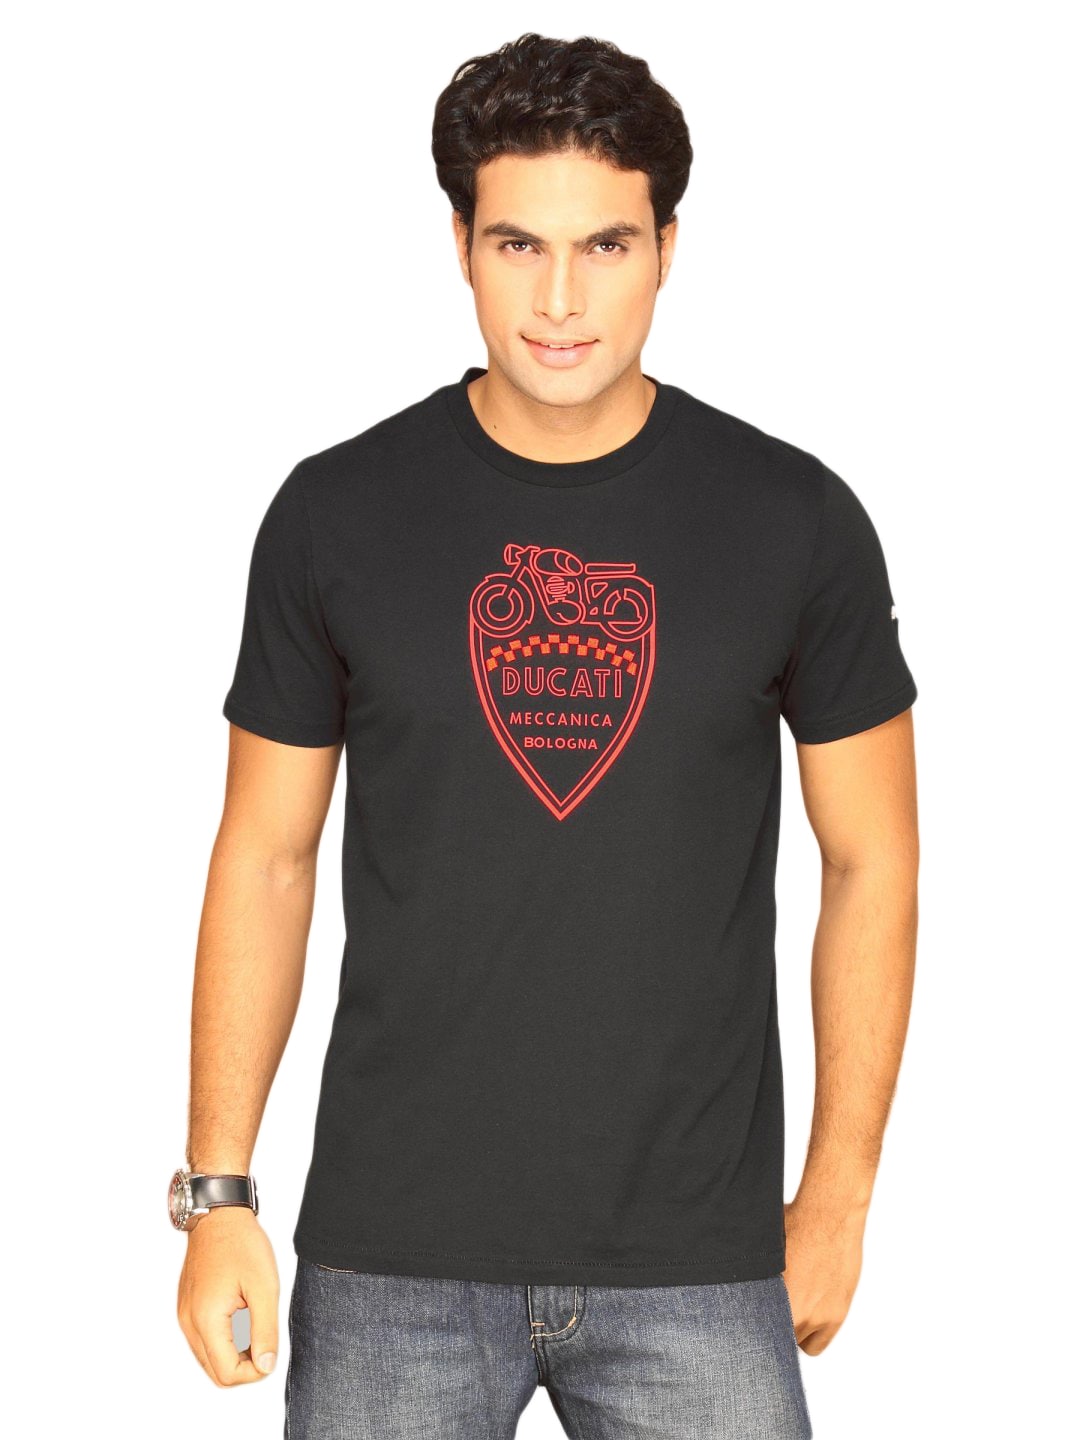 Puma Men's Ducati Black T-shirt